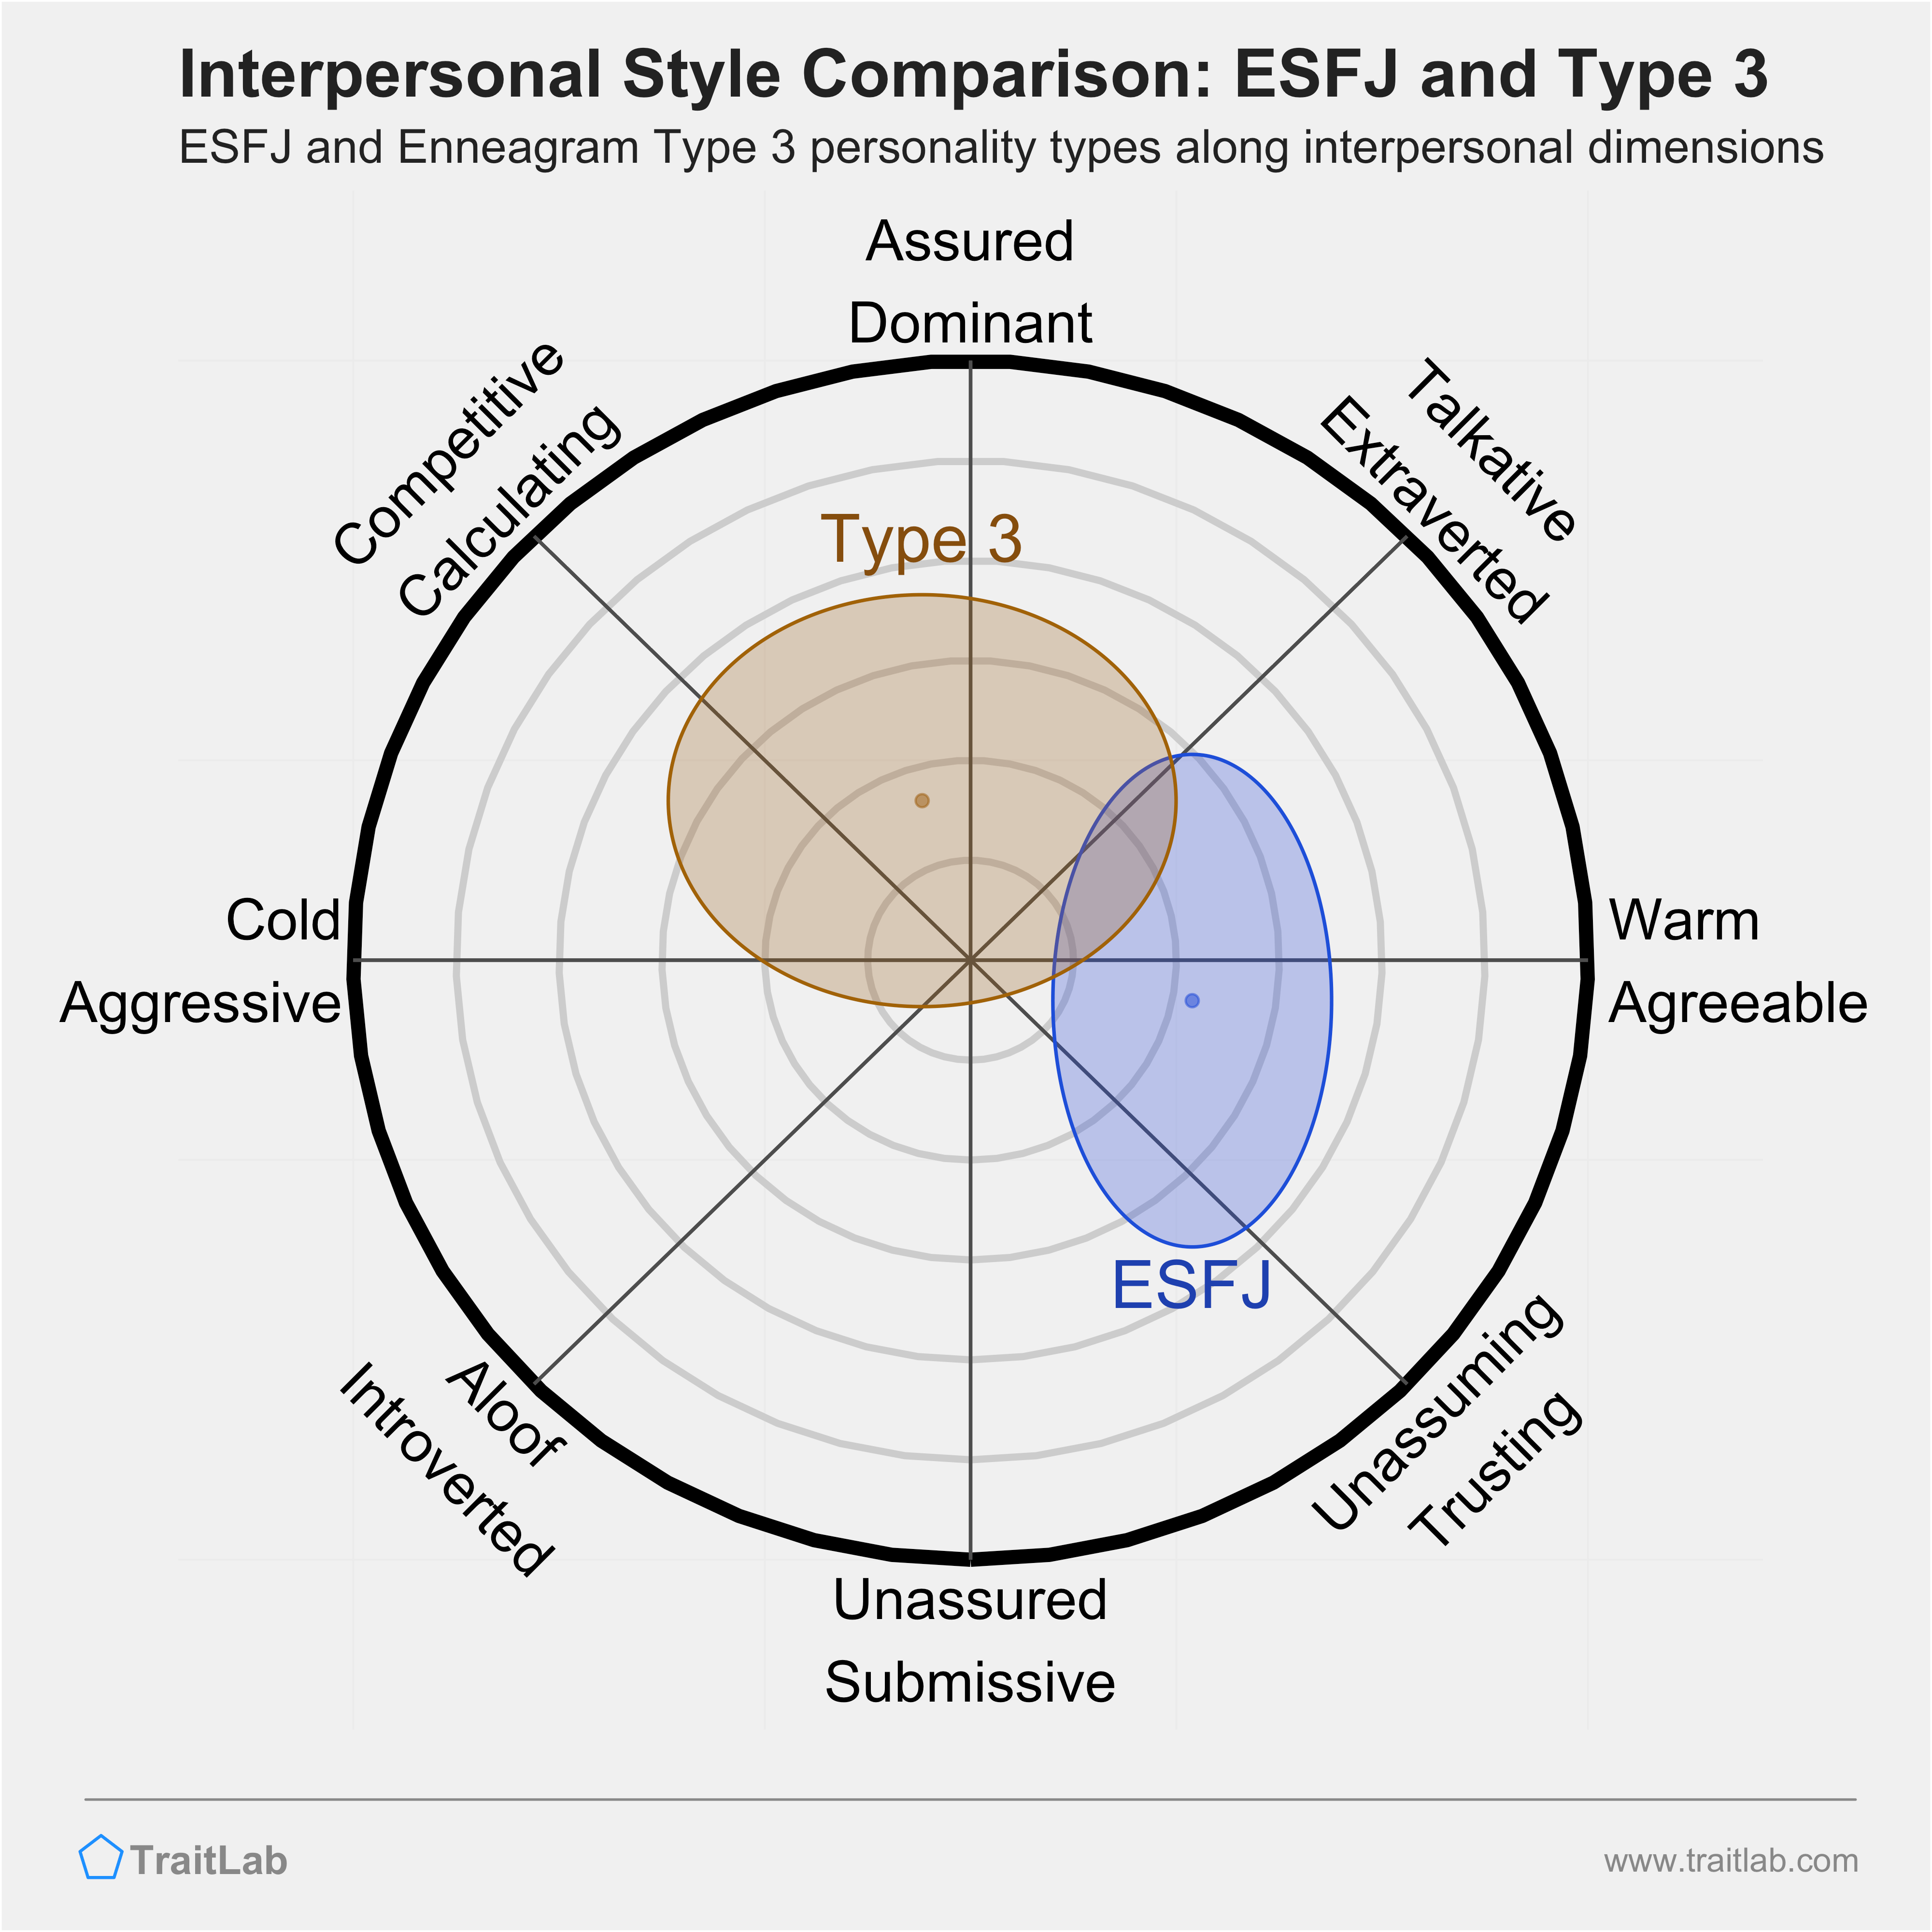 Enneagram ESFJ and Type 3 comparison across interpersonal dimensions